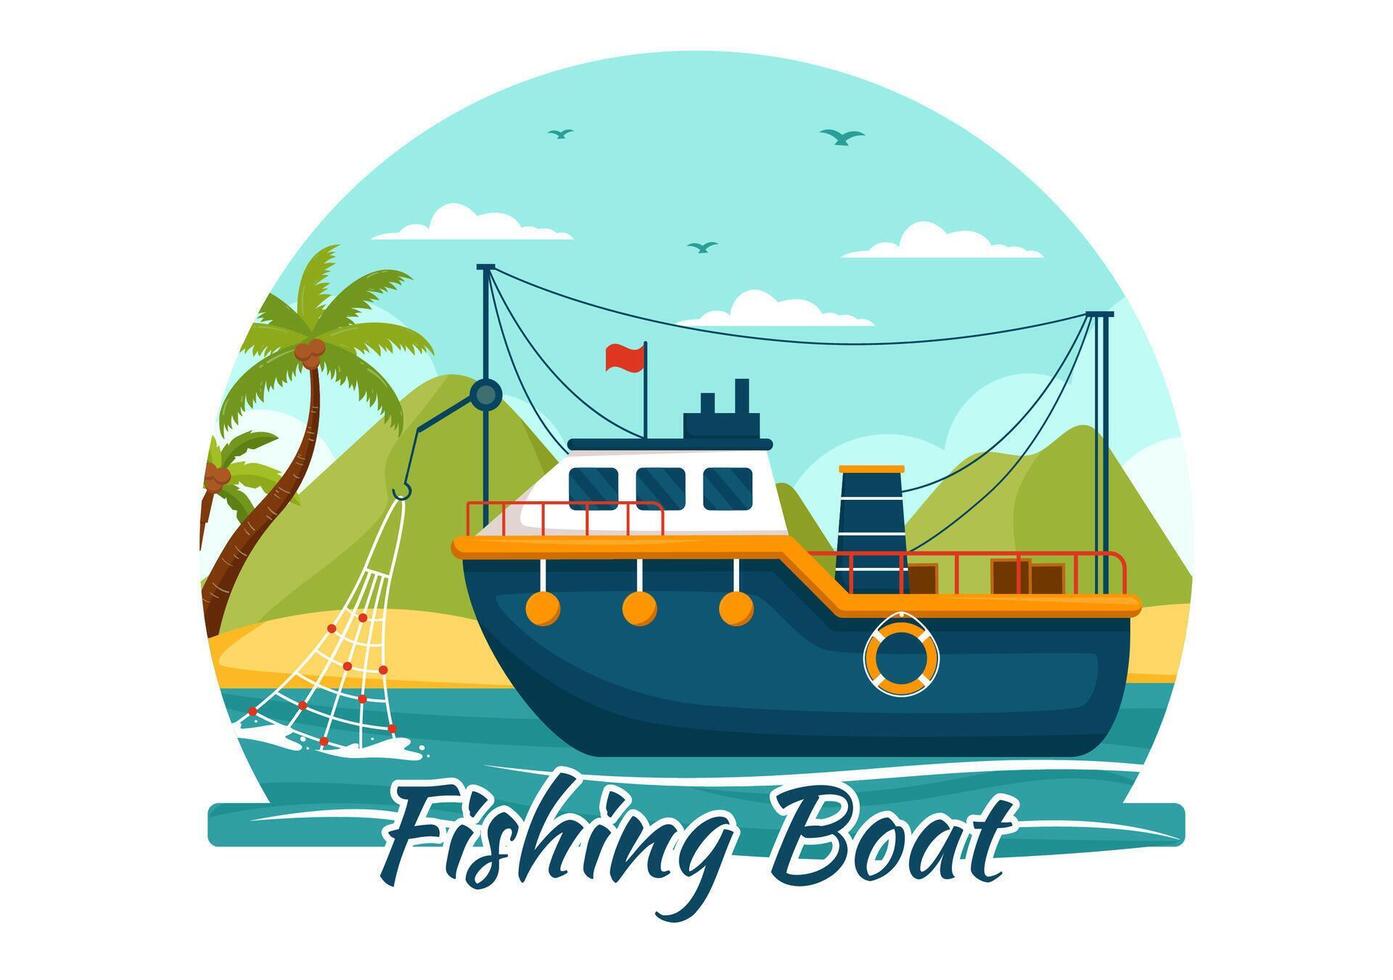 Fishing Boat Illustration with Fishermen Hunting Fish Using Ship at Sea in Flat Cartoon Background Design vector